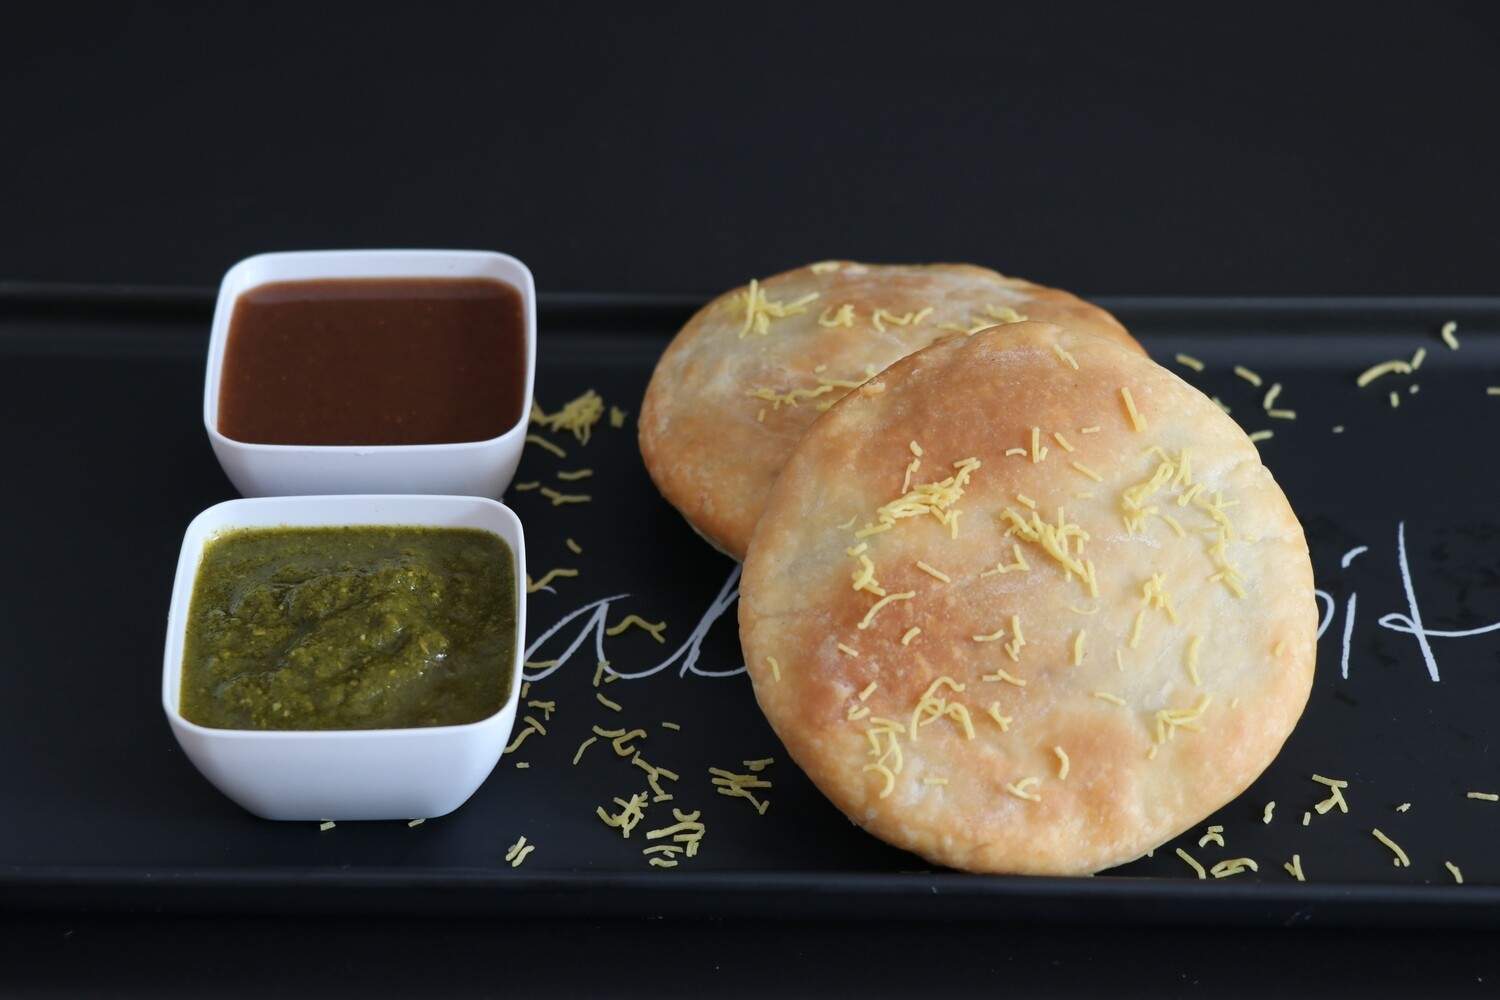 Shegaon Kachori (Lentils filled breads)